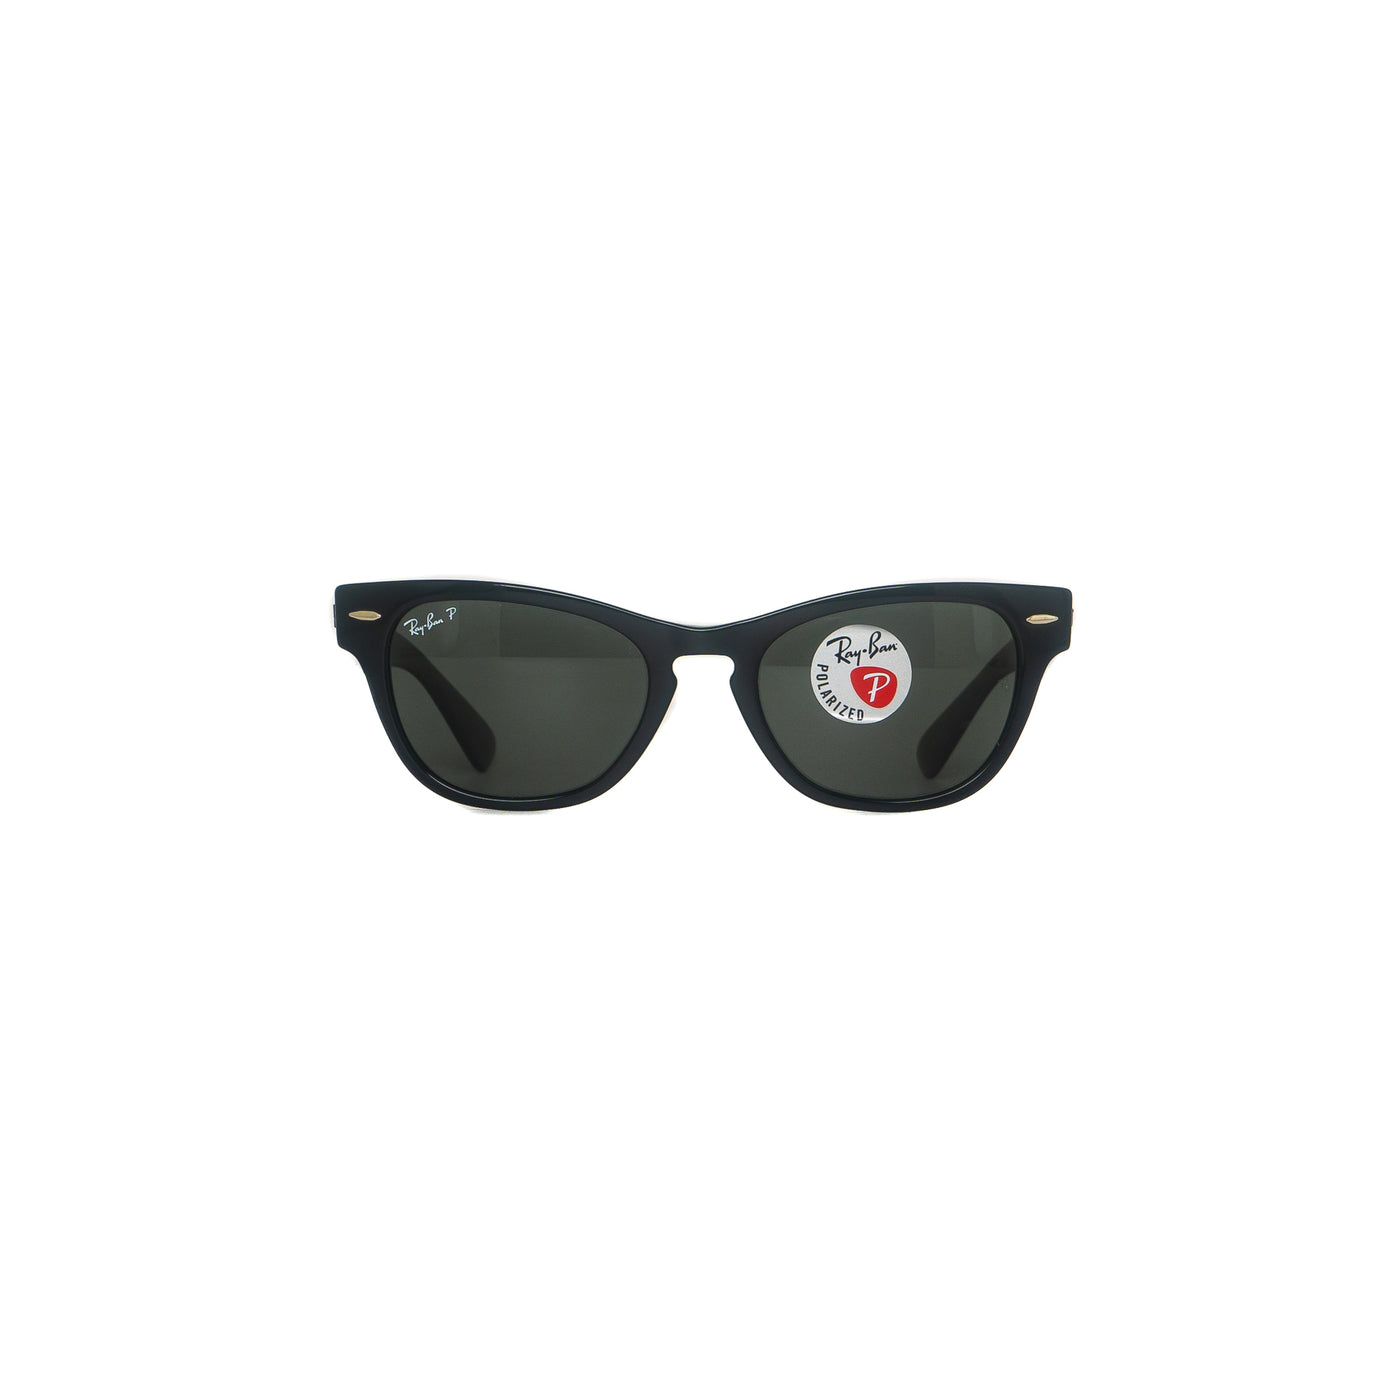 Ray-Ban Laramie RB22019015854 Polarized | Sunglasses - Vision Express Optical Philippines